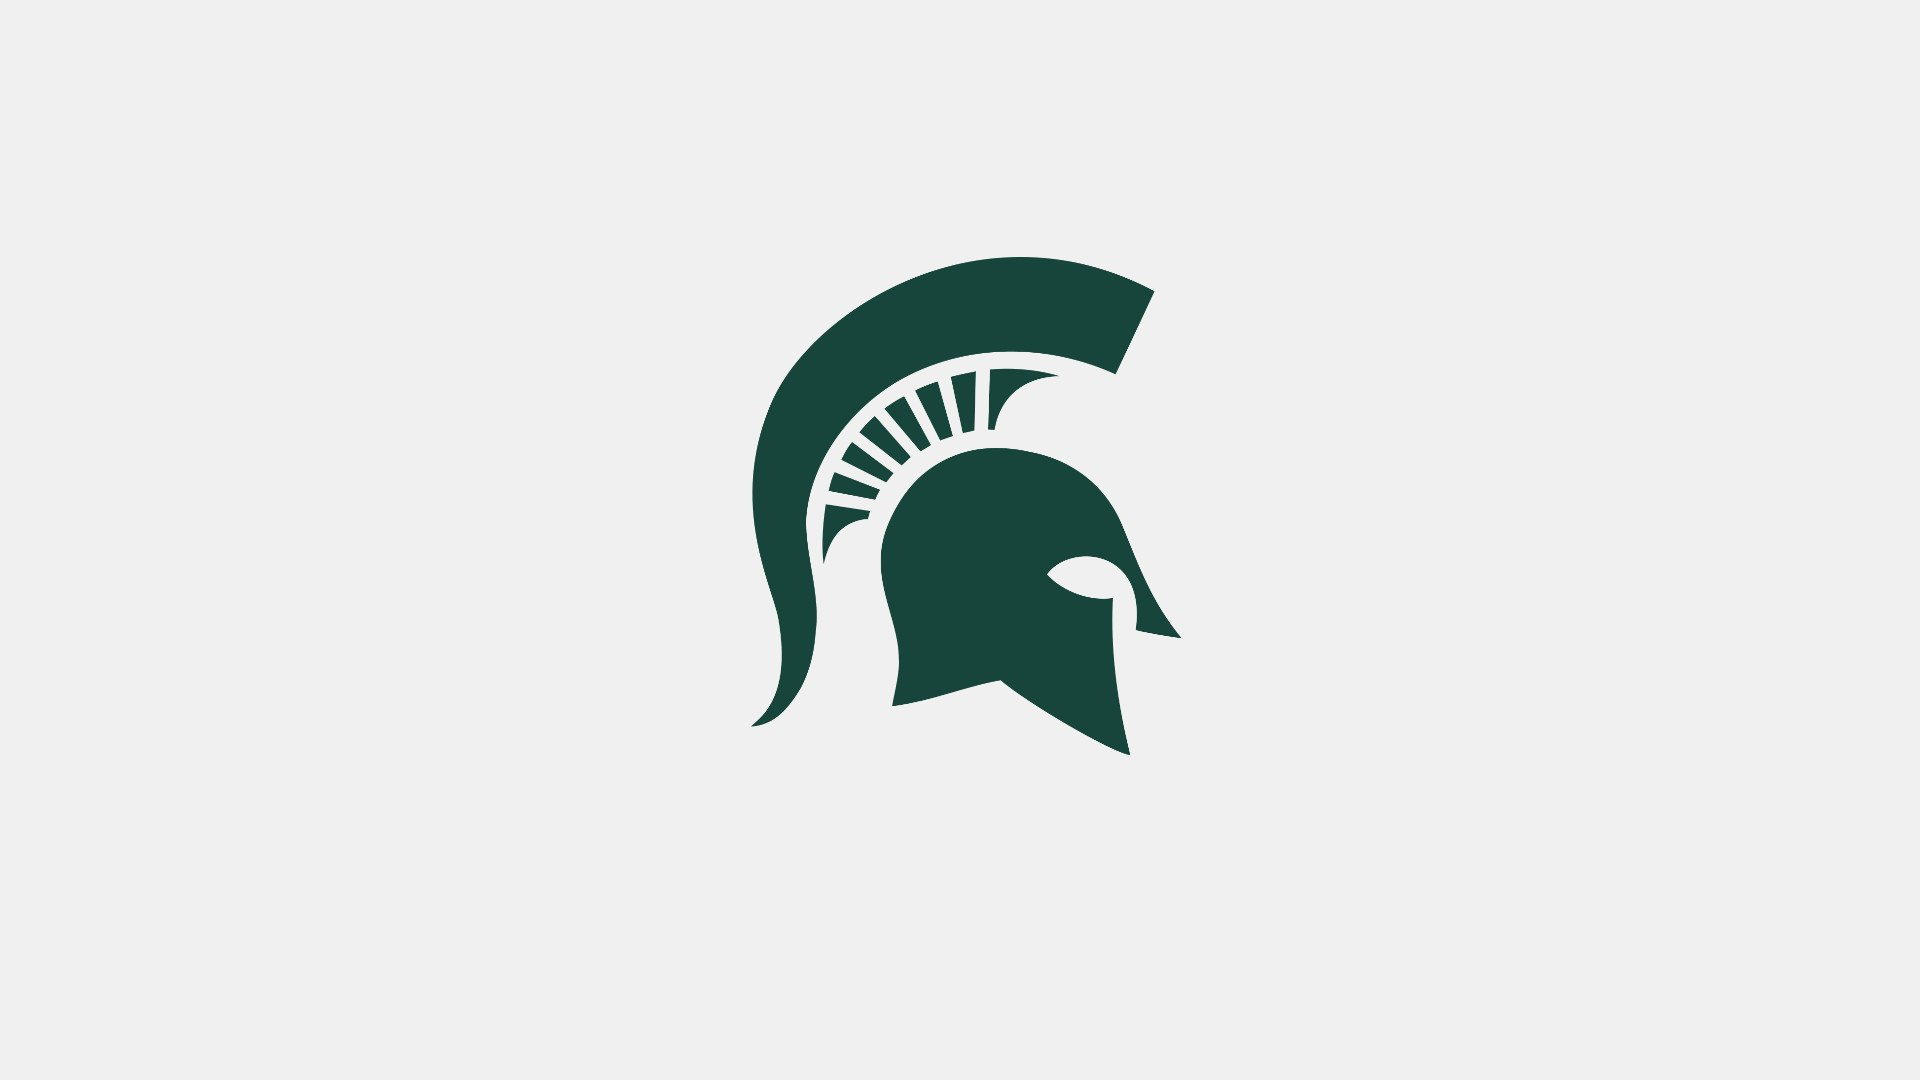 General 1920x1080 logo college university Michigan NCAA Spartans